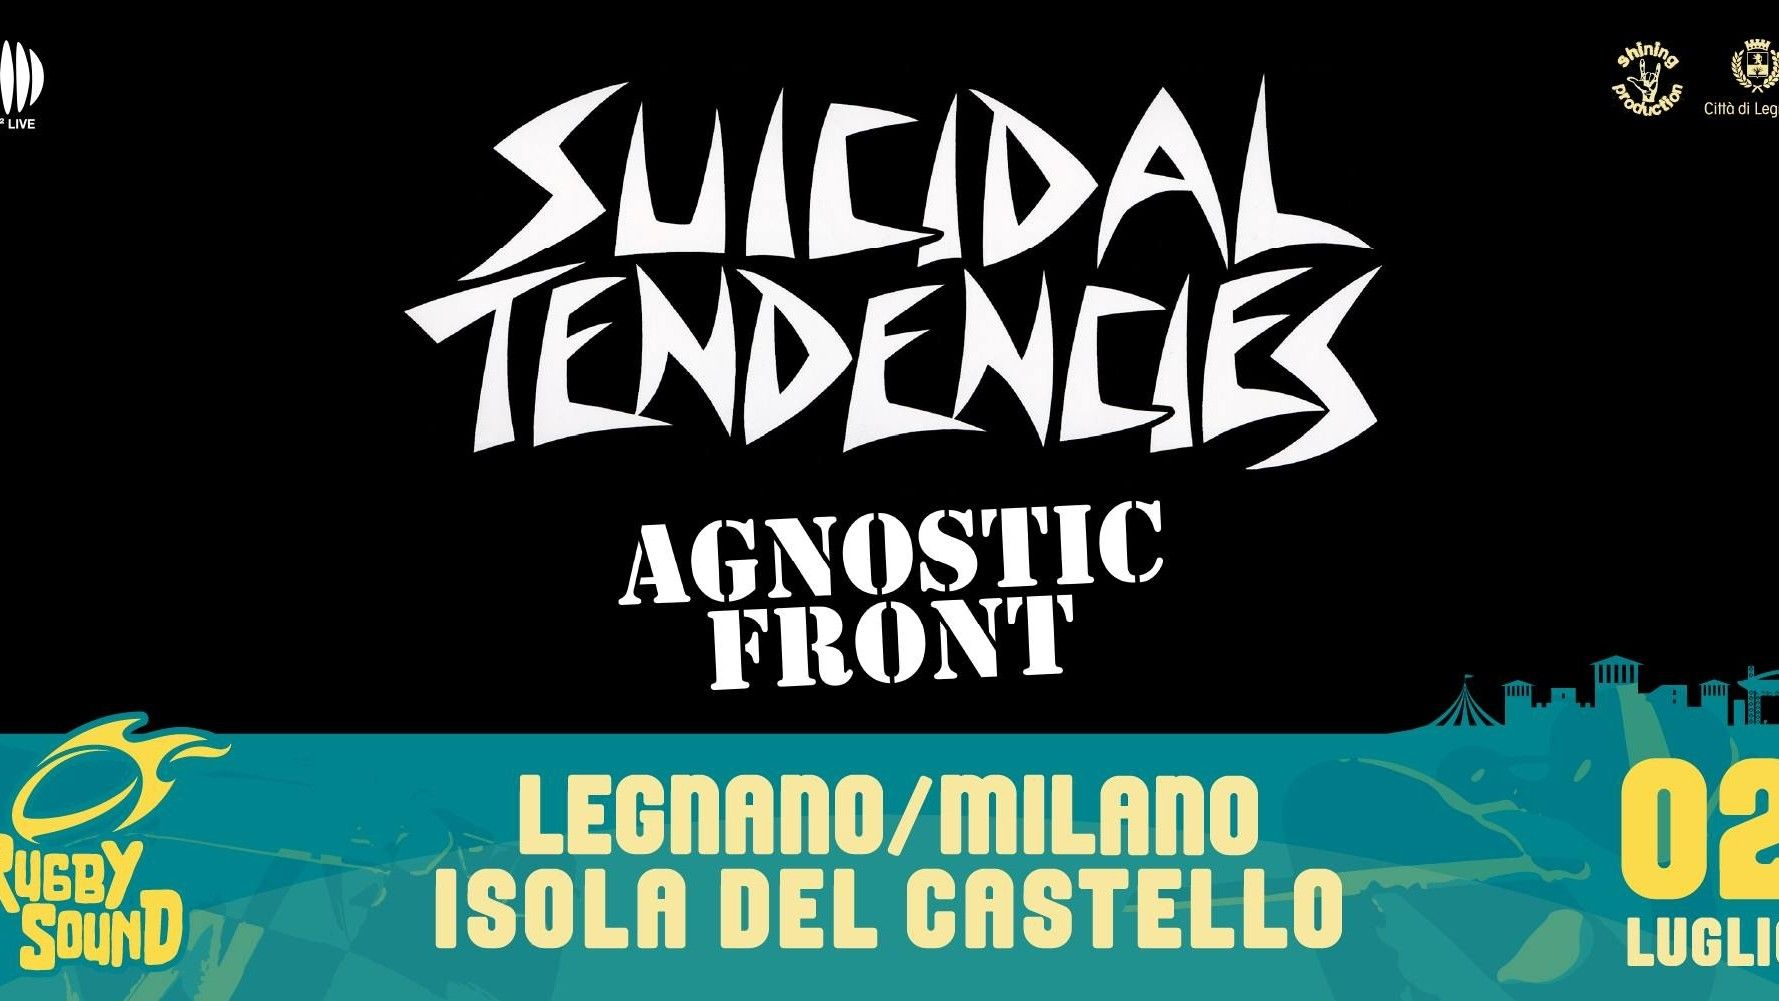 Suicidal Tendencies + Agnostic Front